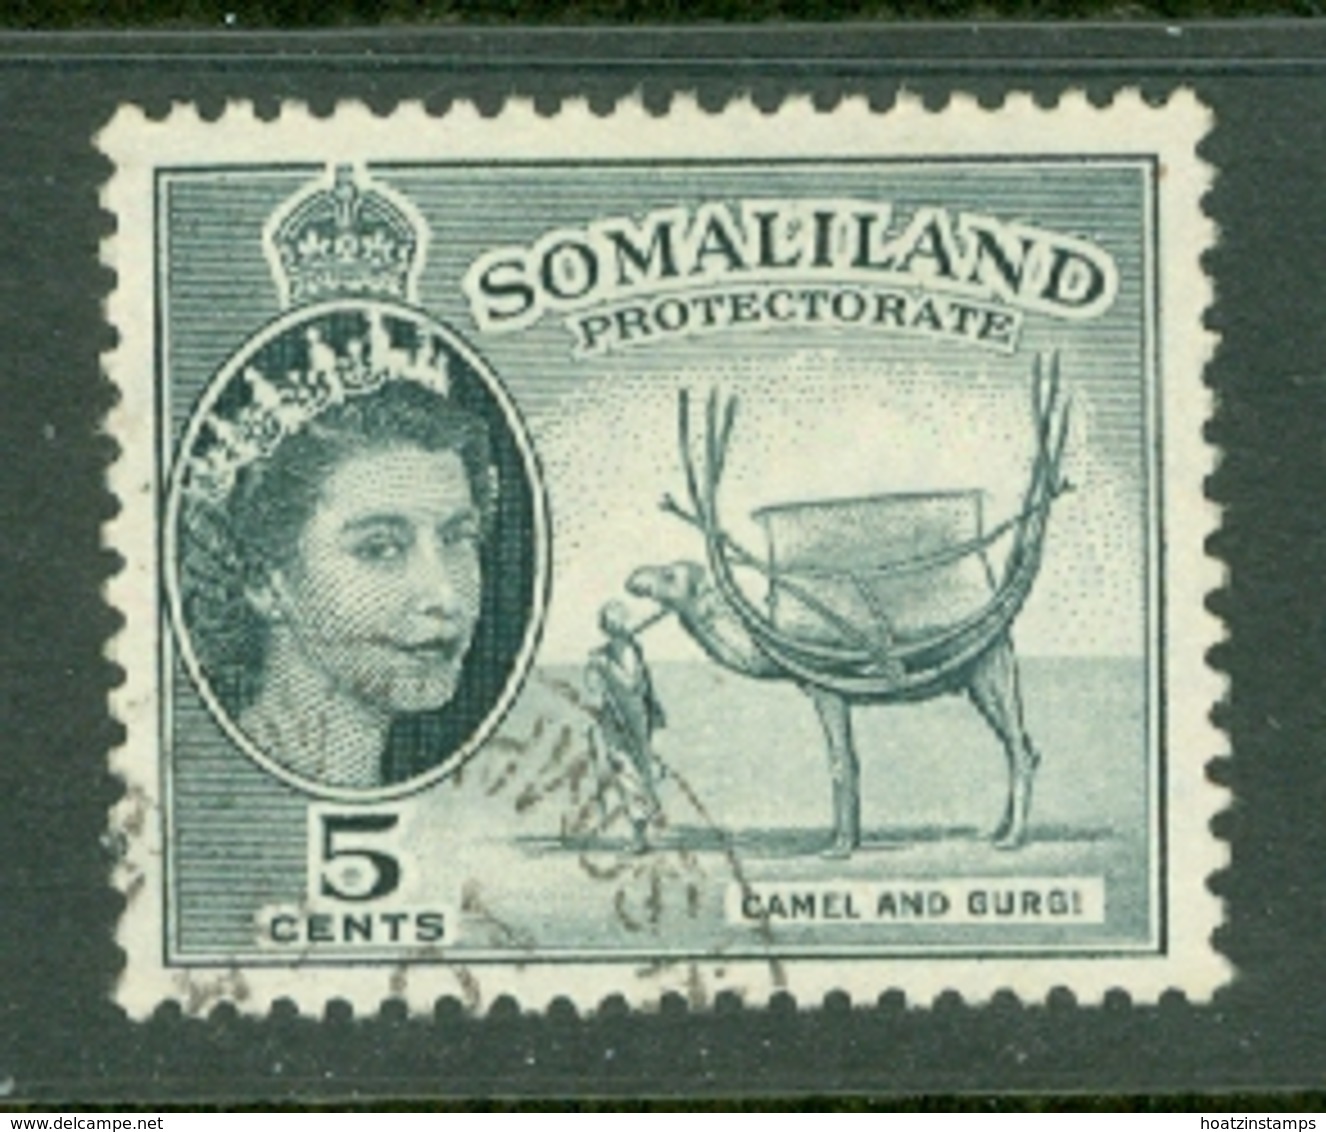 Somaliland Protectorate: 1953/58   QE II - Pictorial    SG137     5c     Used - Somalilandia (Protectorado ...-1959)